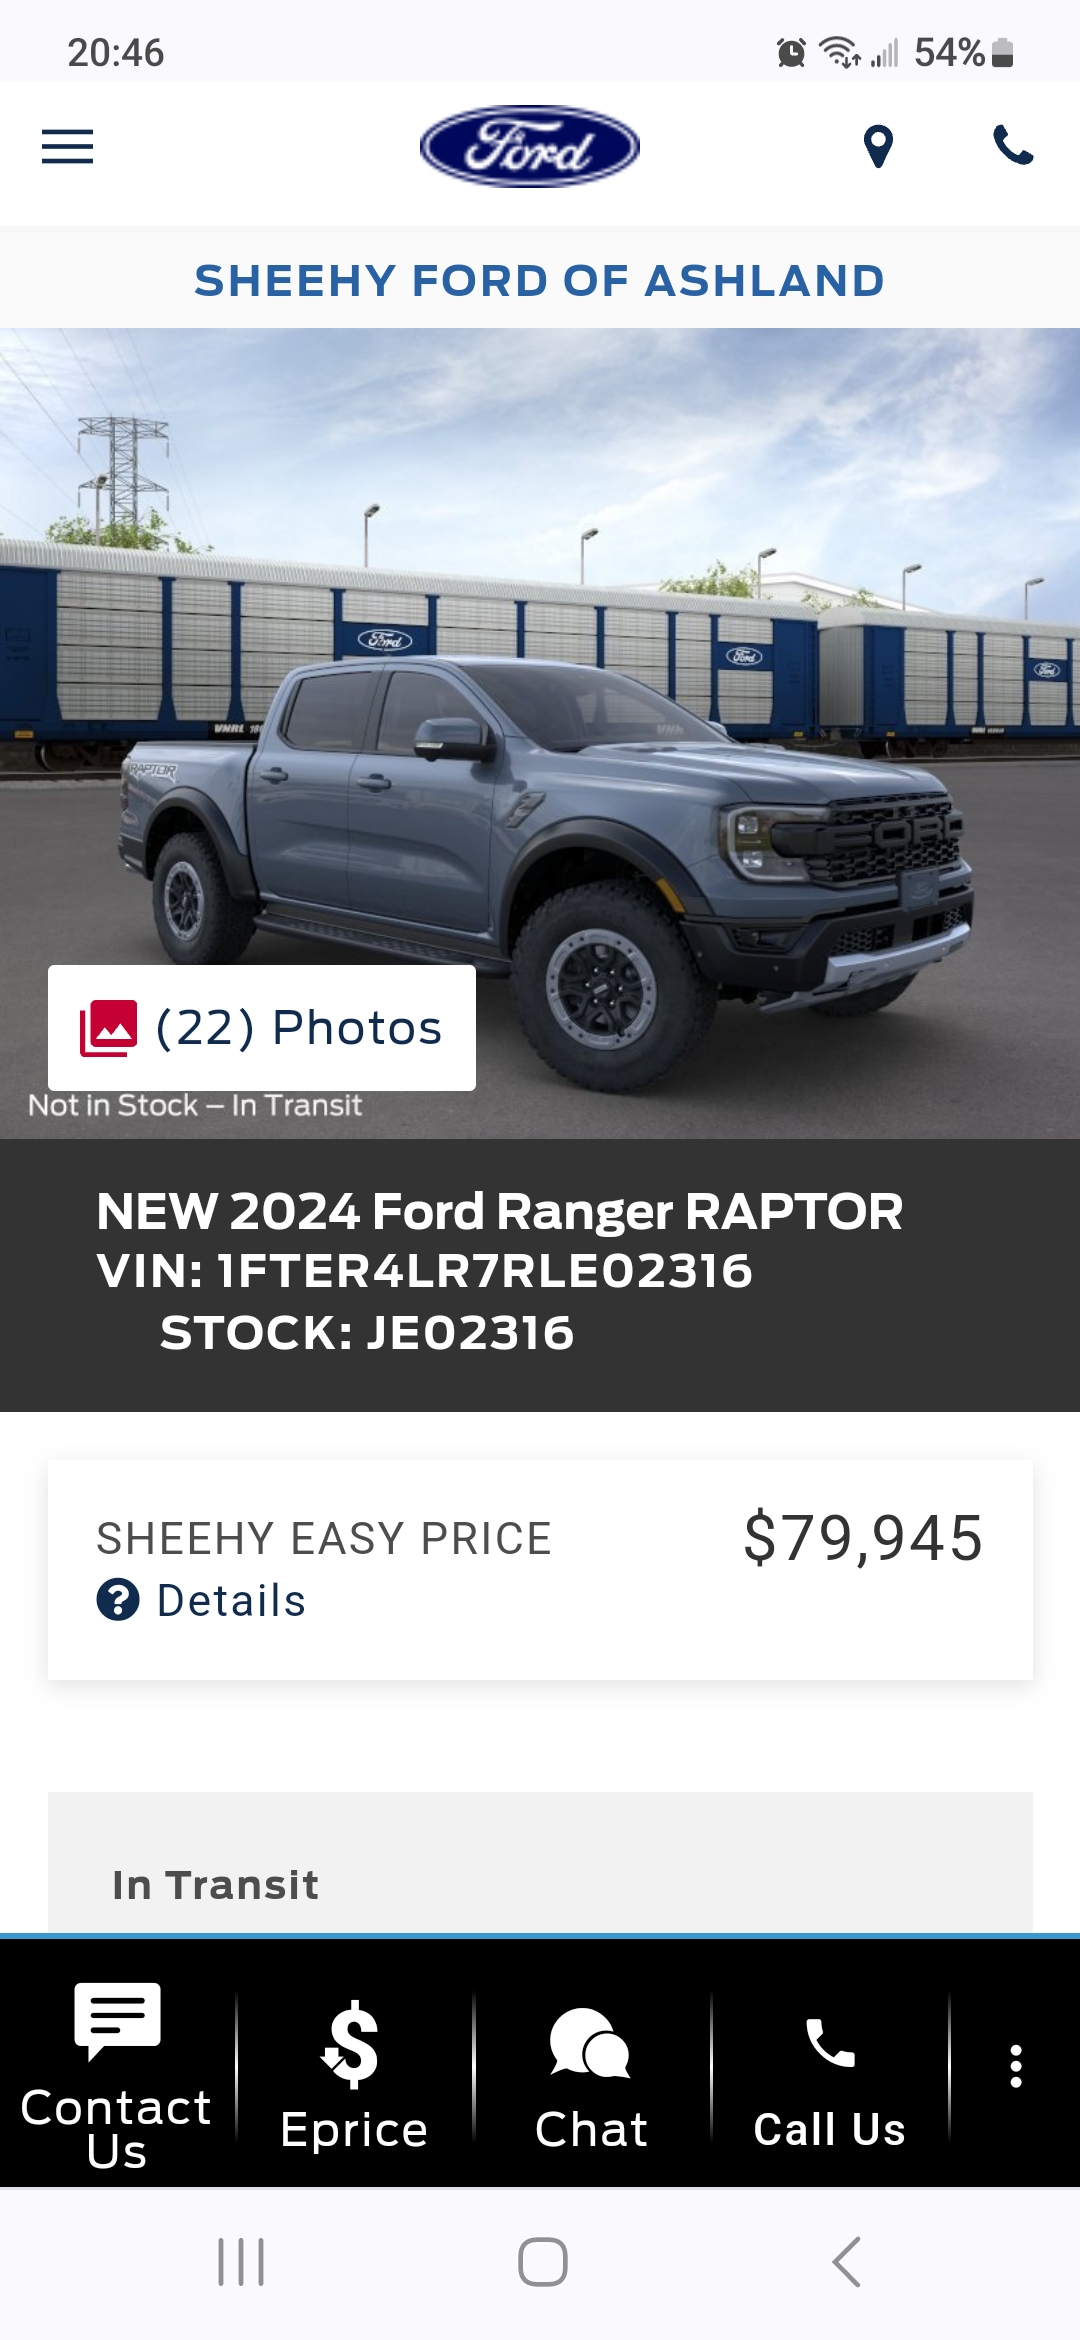 Ford Ranger $20,000 Markup on Raptor 1000003418